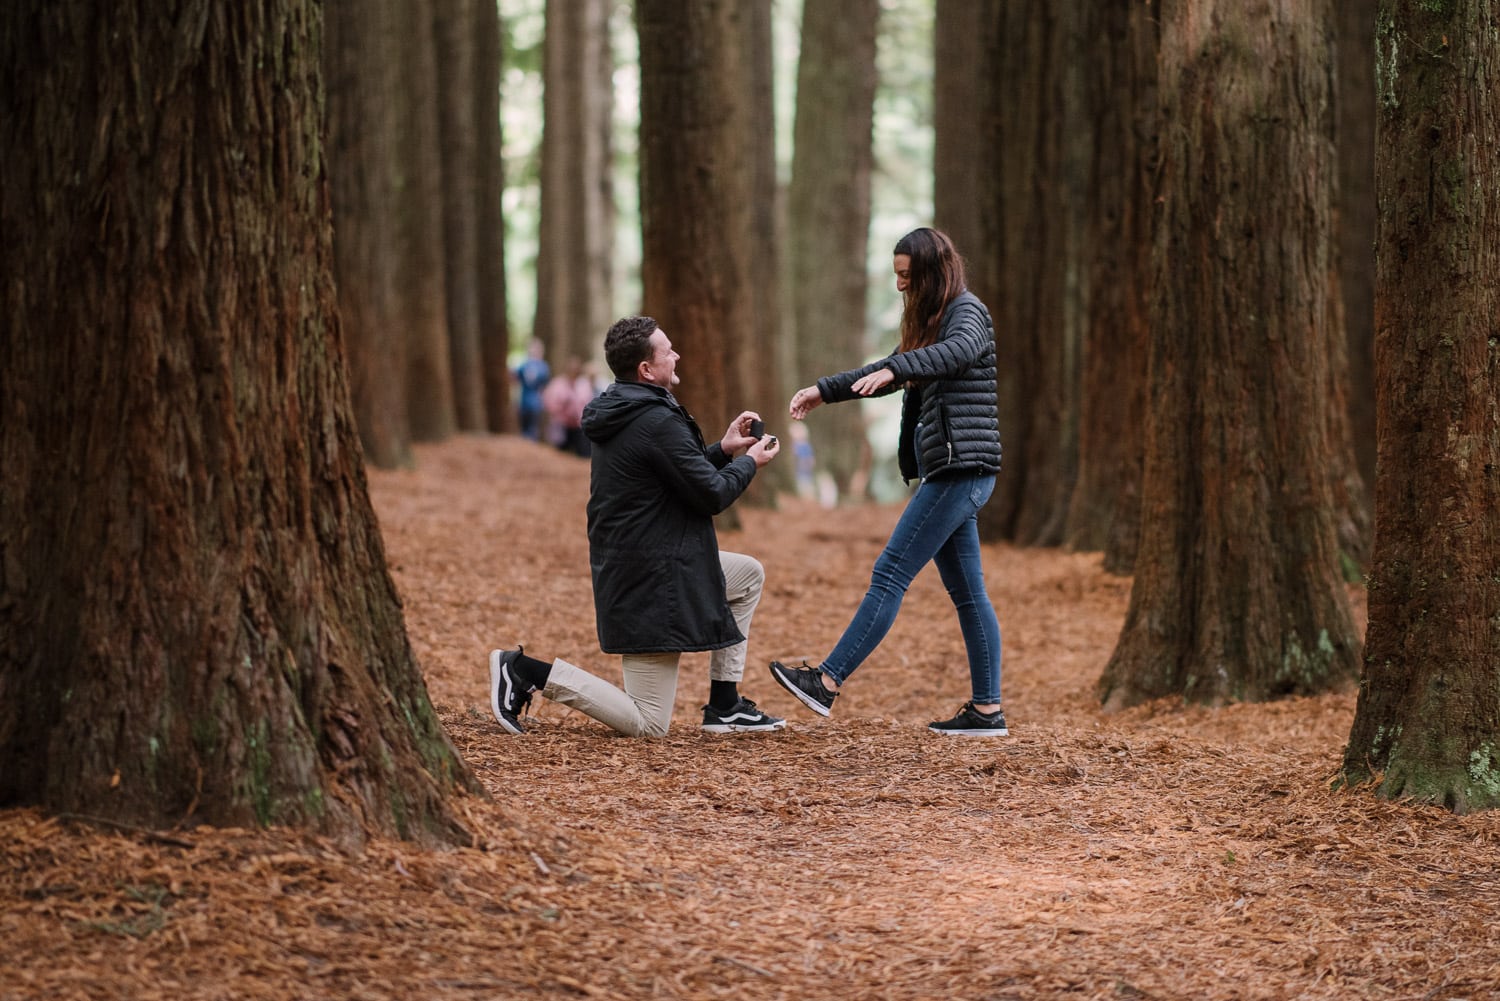 Wedding proposal in the Otways Redwoods